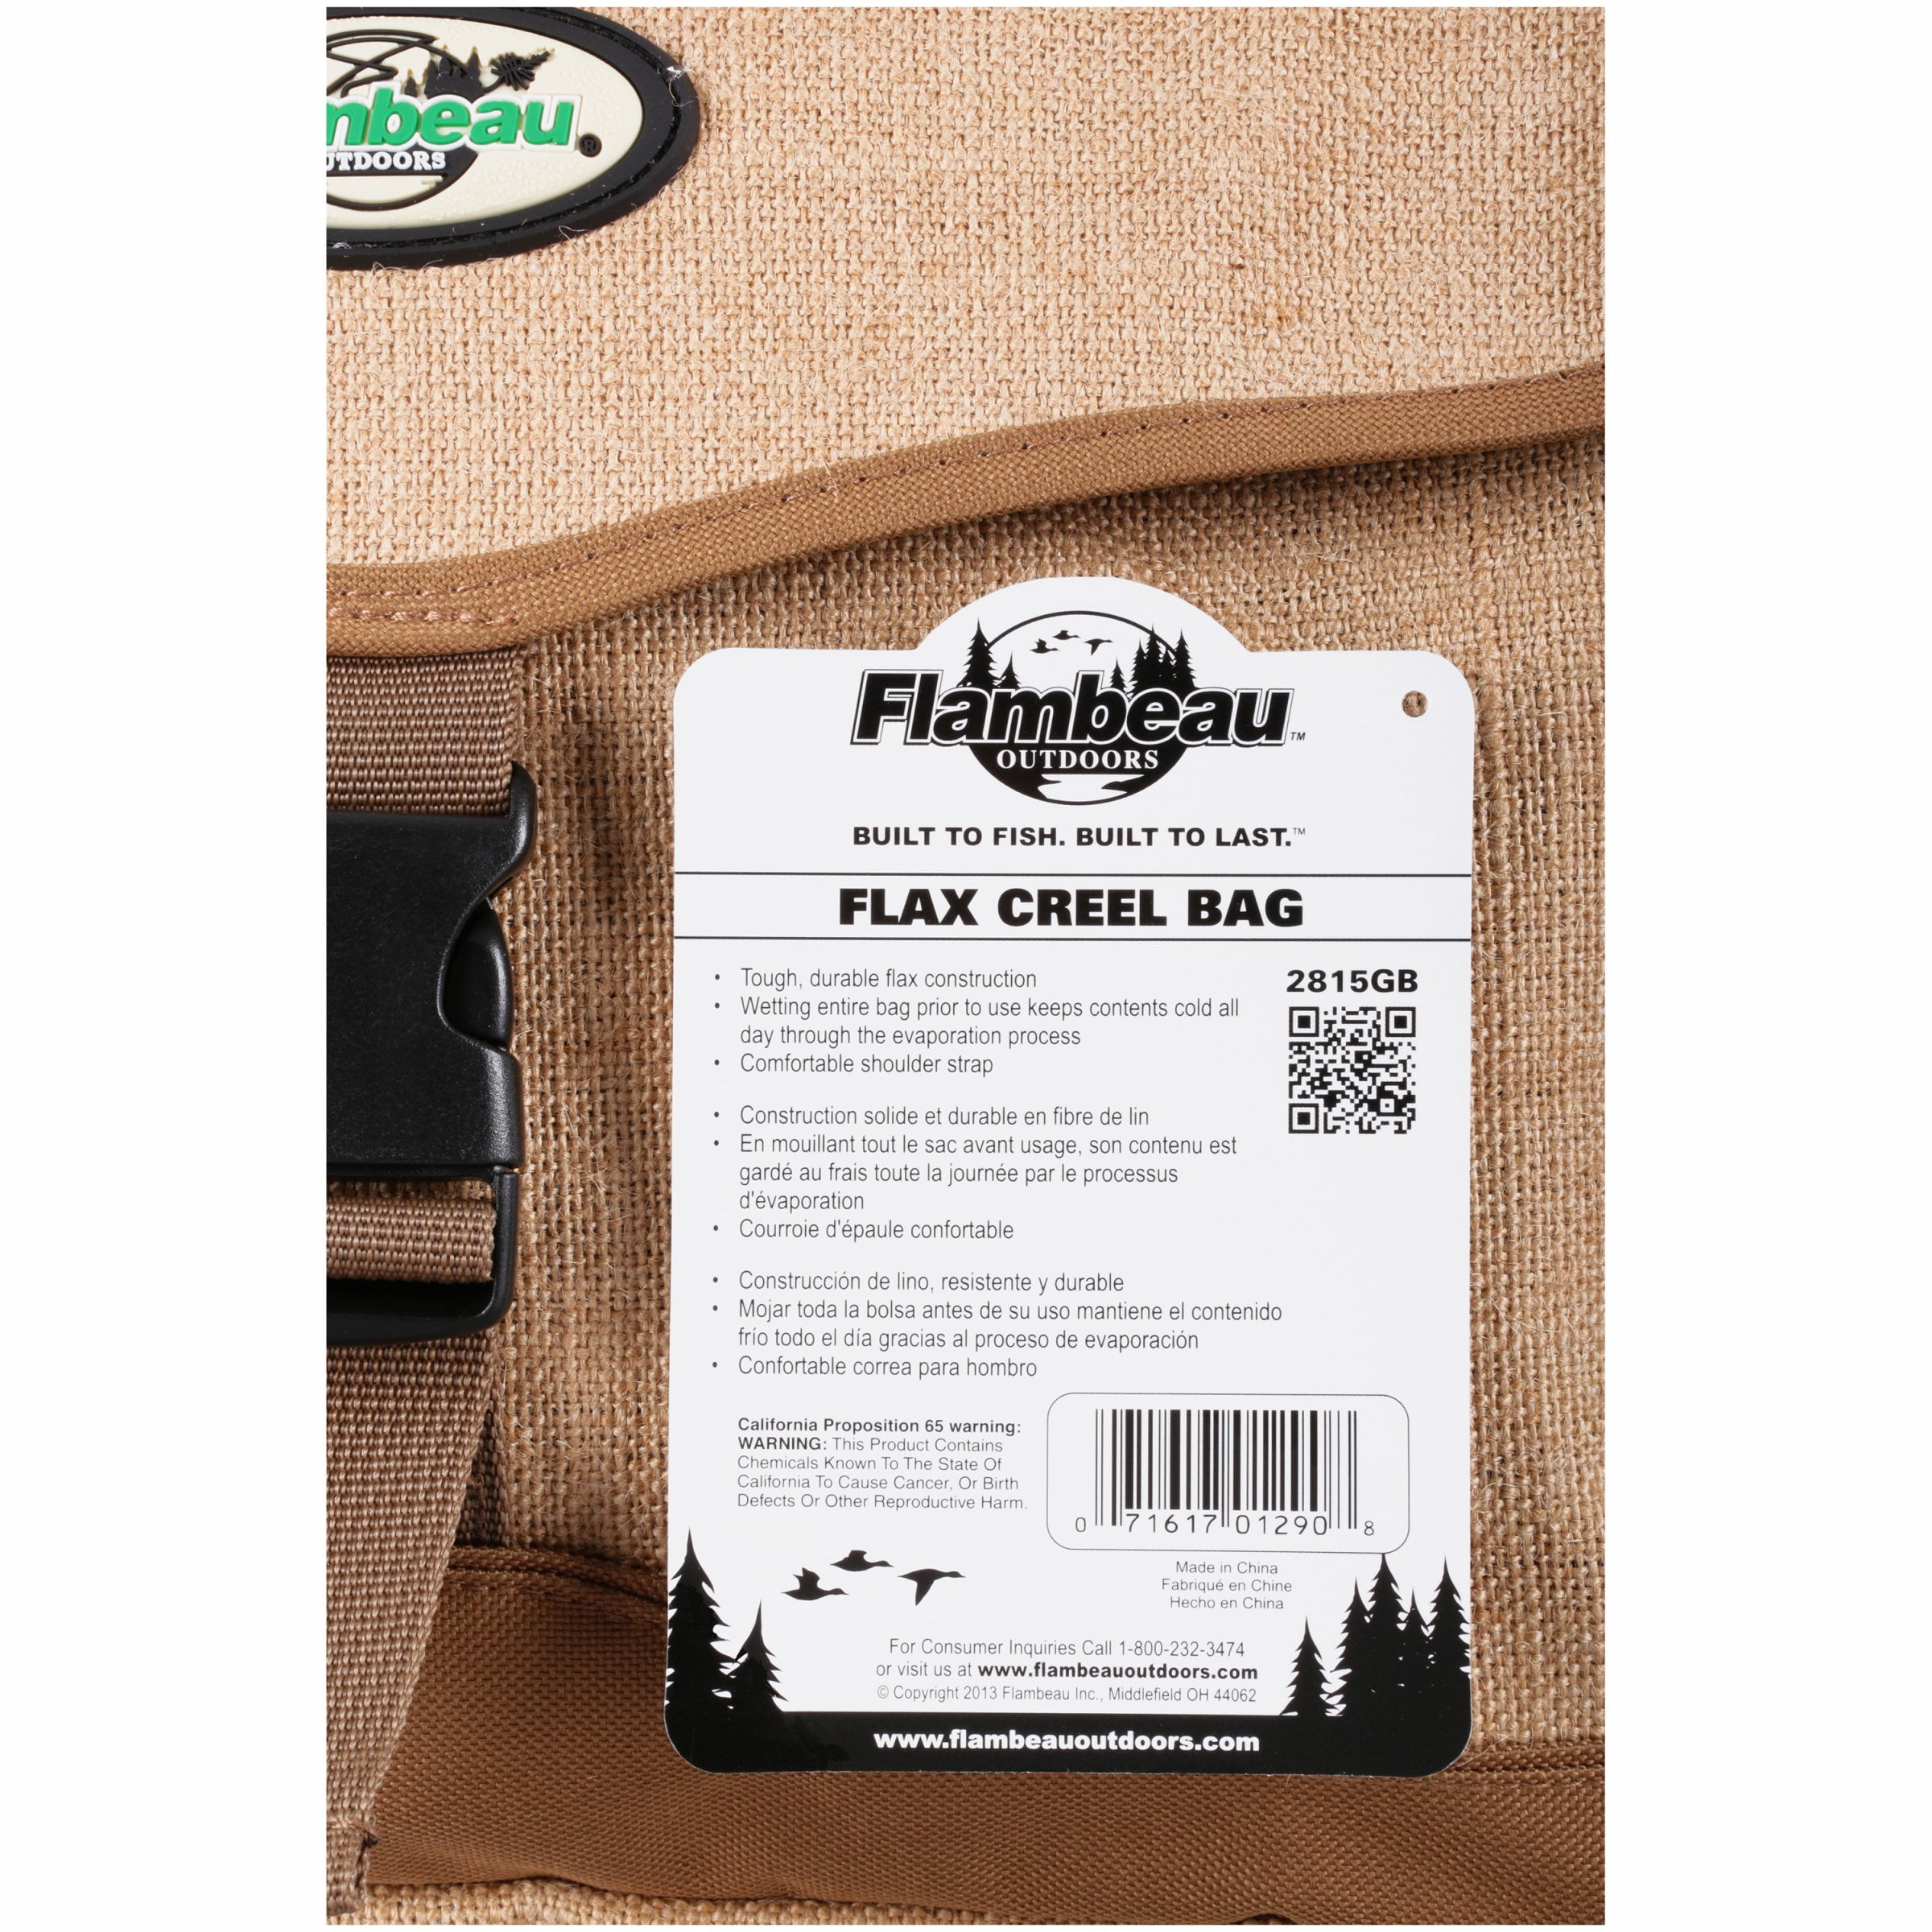 Flambeau Outdoors Flax Creel Bag